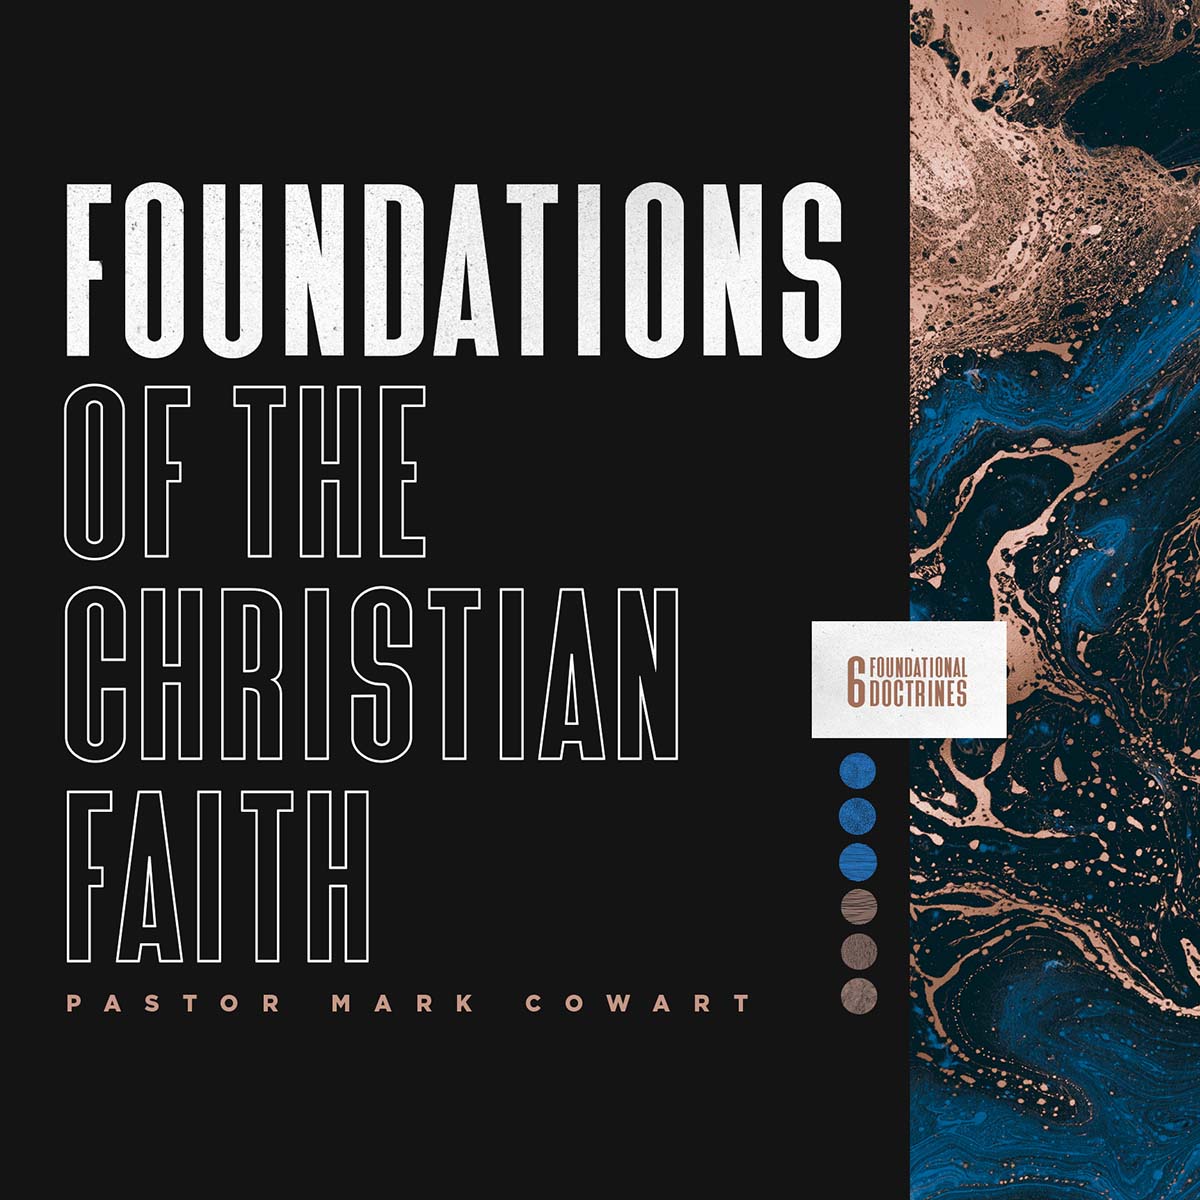 Foundations of the Christian Faith - 6 Foundational Doctrines - Pastor Mark Cowart